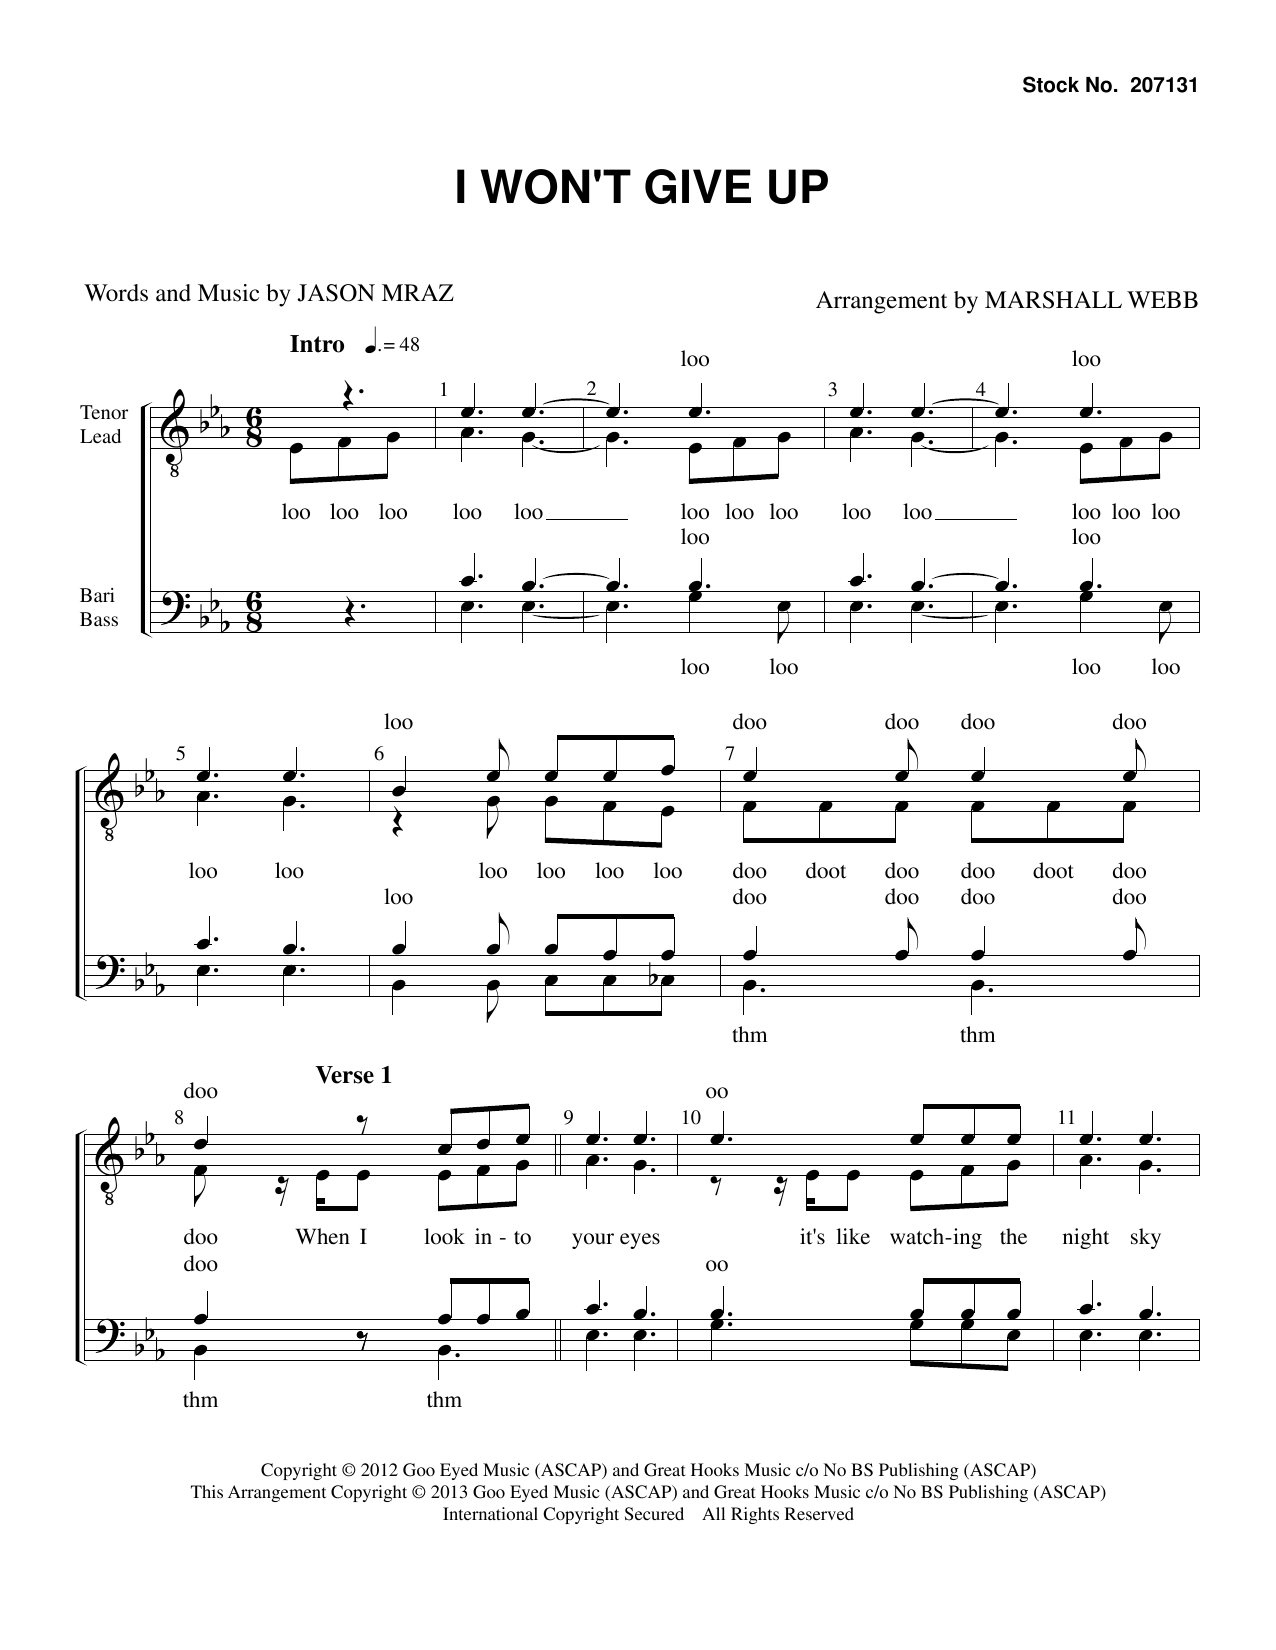 Jason Mraz I Won't Give Up (arr. Marshall Webb) Sheet Music Notes & Chords for TTBB Choir - Download or Print PDF